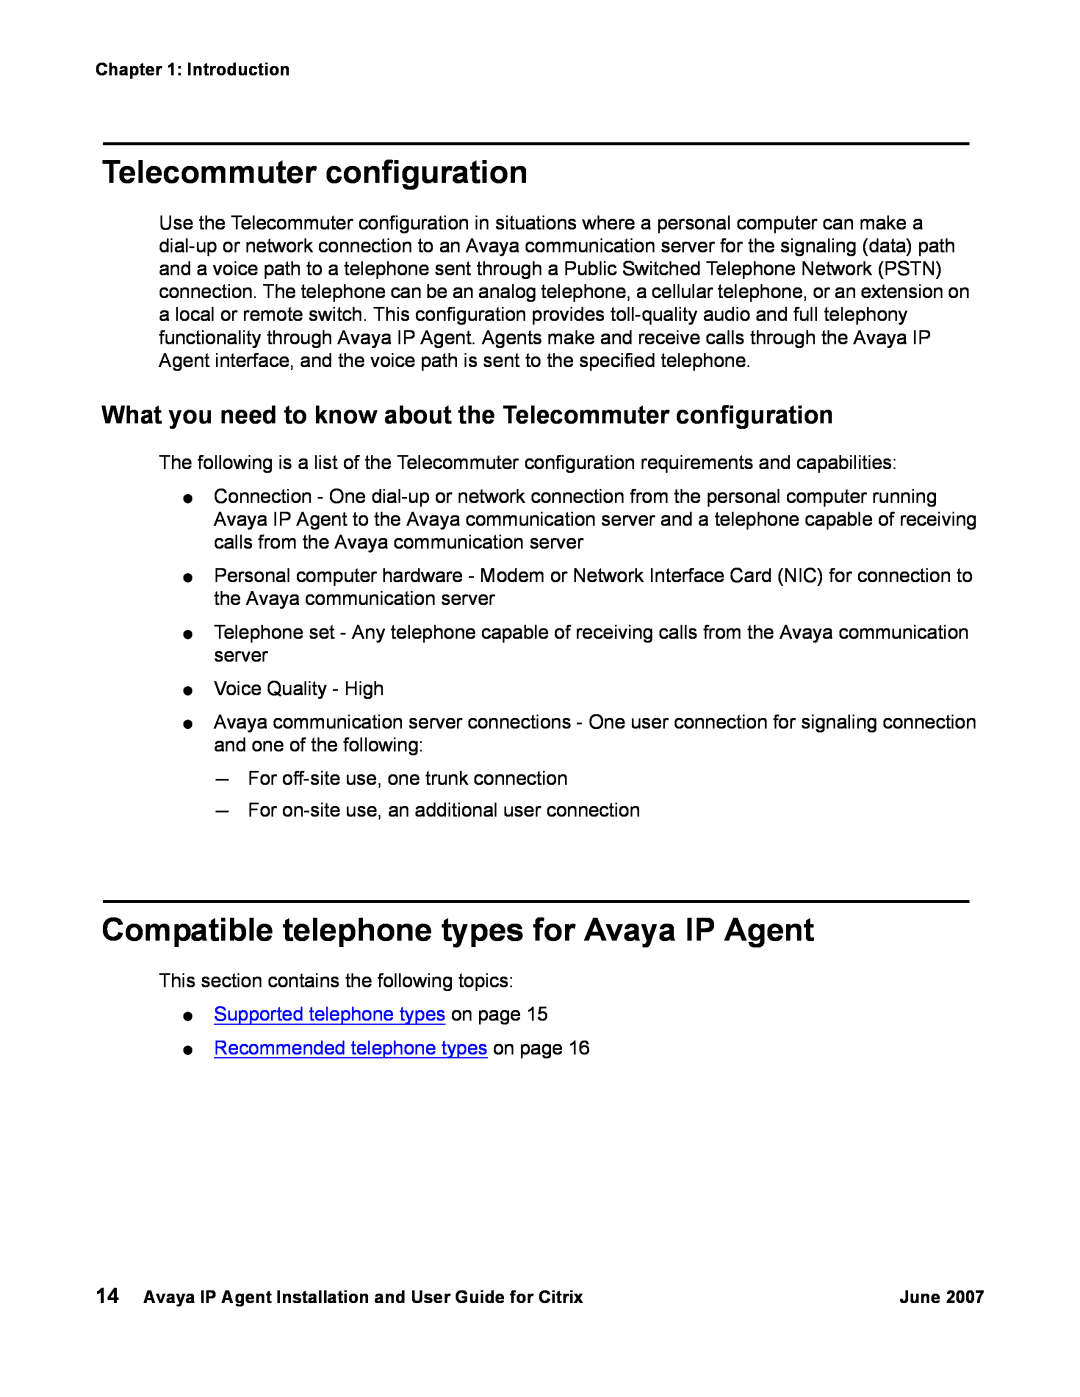 Avaya 7 manual Telecommuter configuration, Compatible telephone types for Avaya IP Agent 